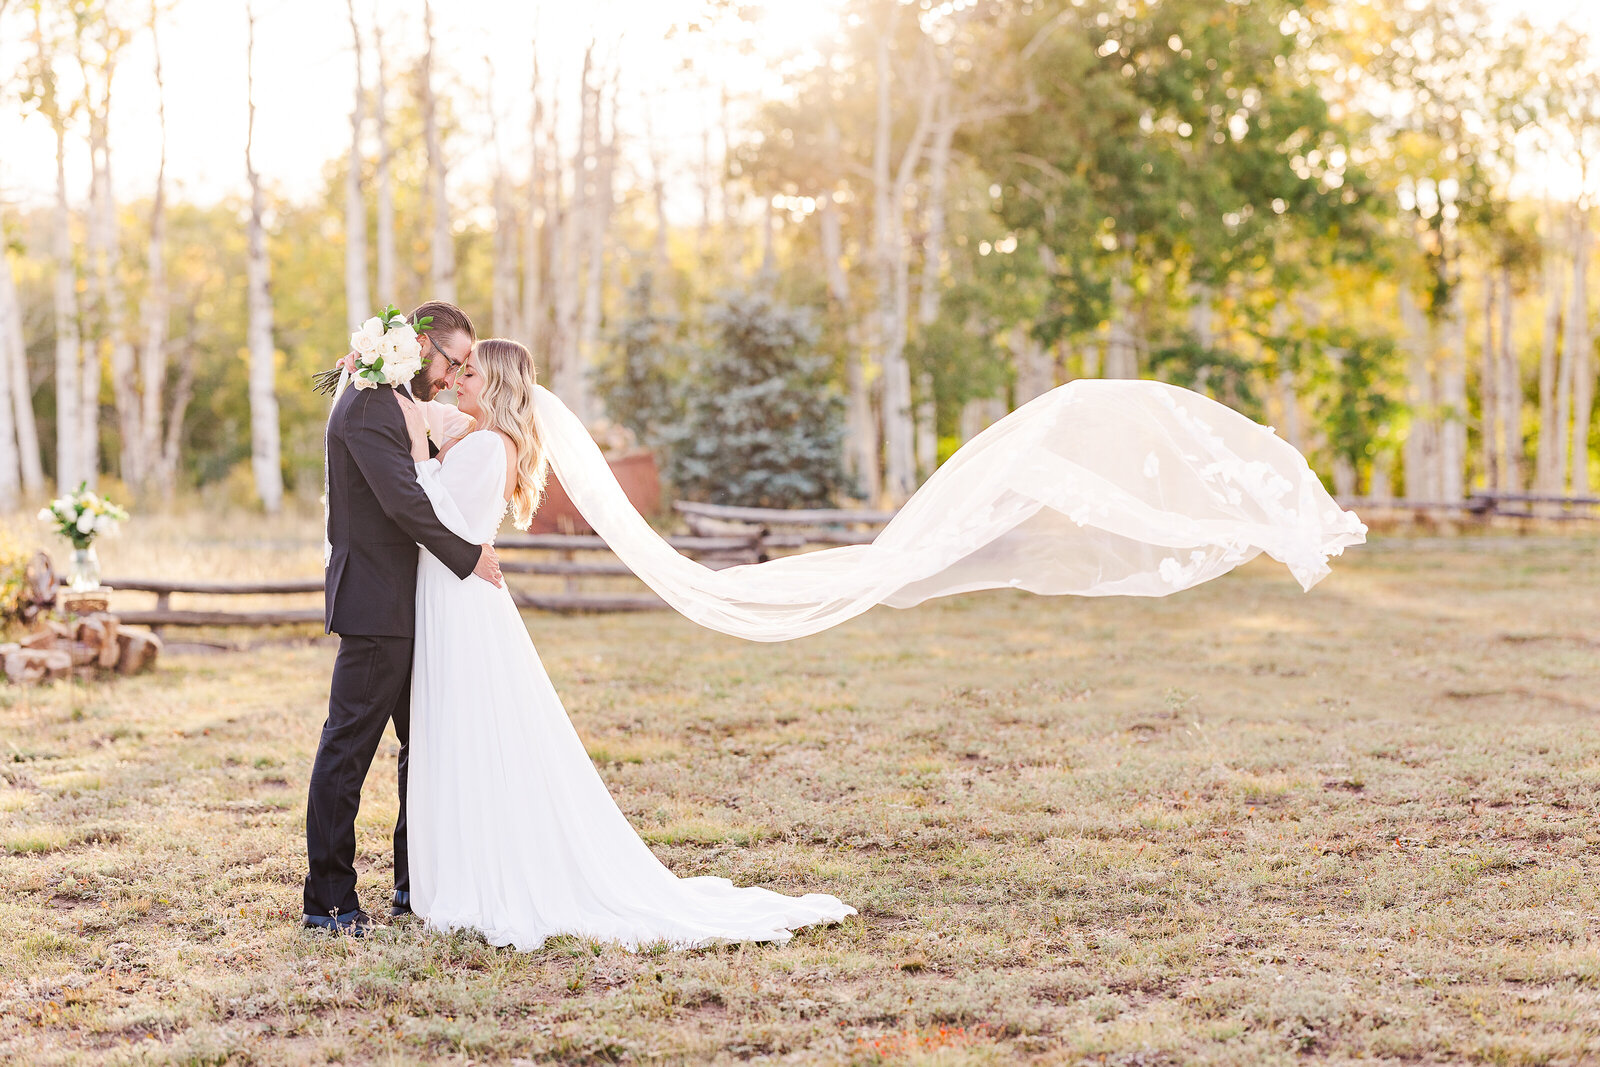 Groom holding bride in field as her veil flies against the sunset